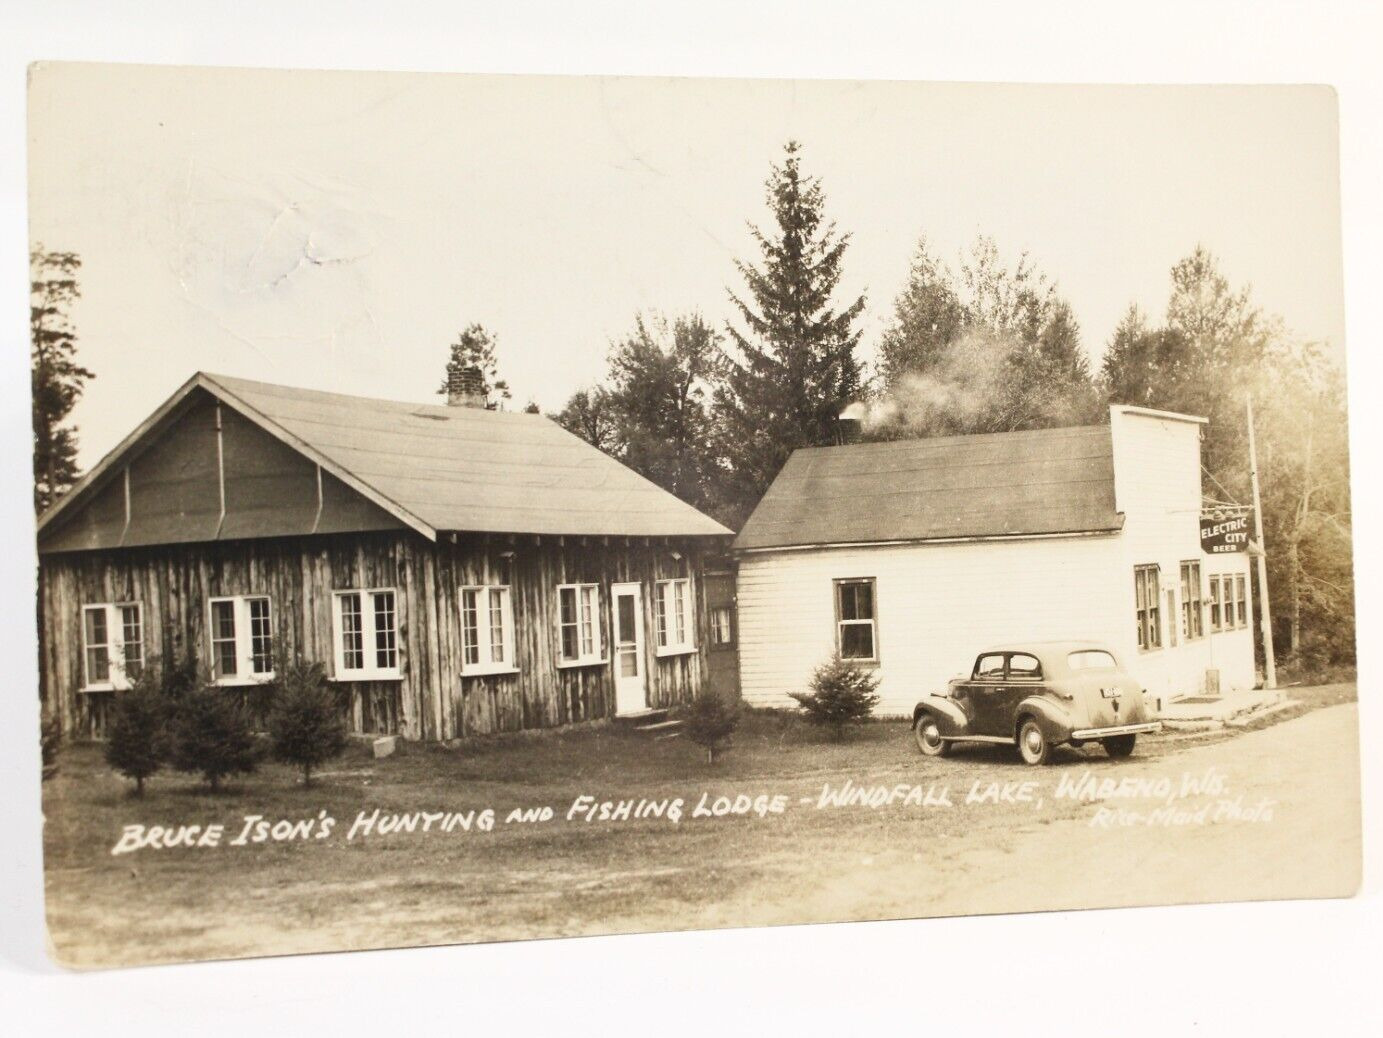 RPPC Bruce Ison's Hunting & Fishing Lodge. Windfall Lake. Wabeno, Wisconsin